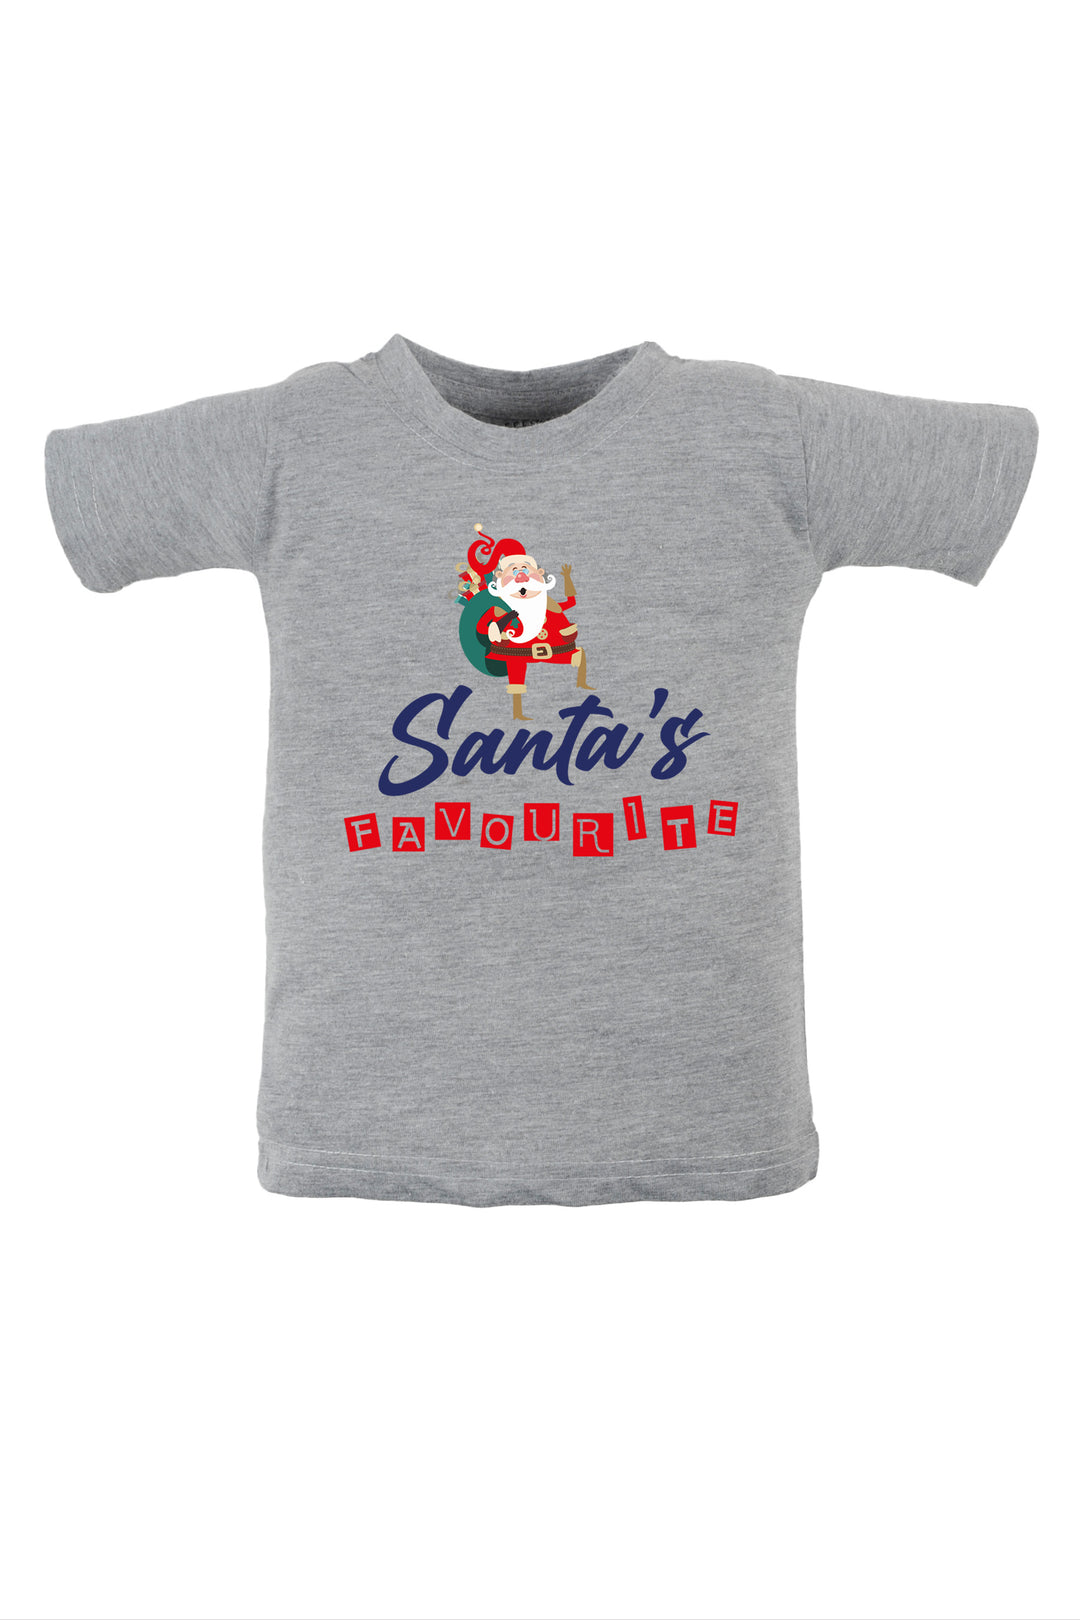 Santa's Favourite Kids T Shirt